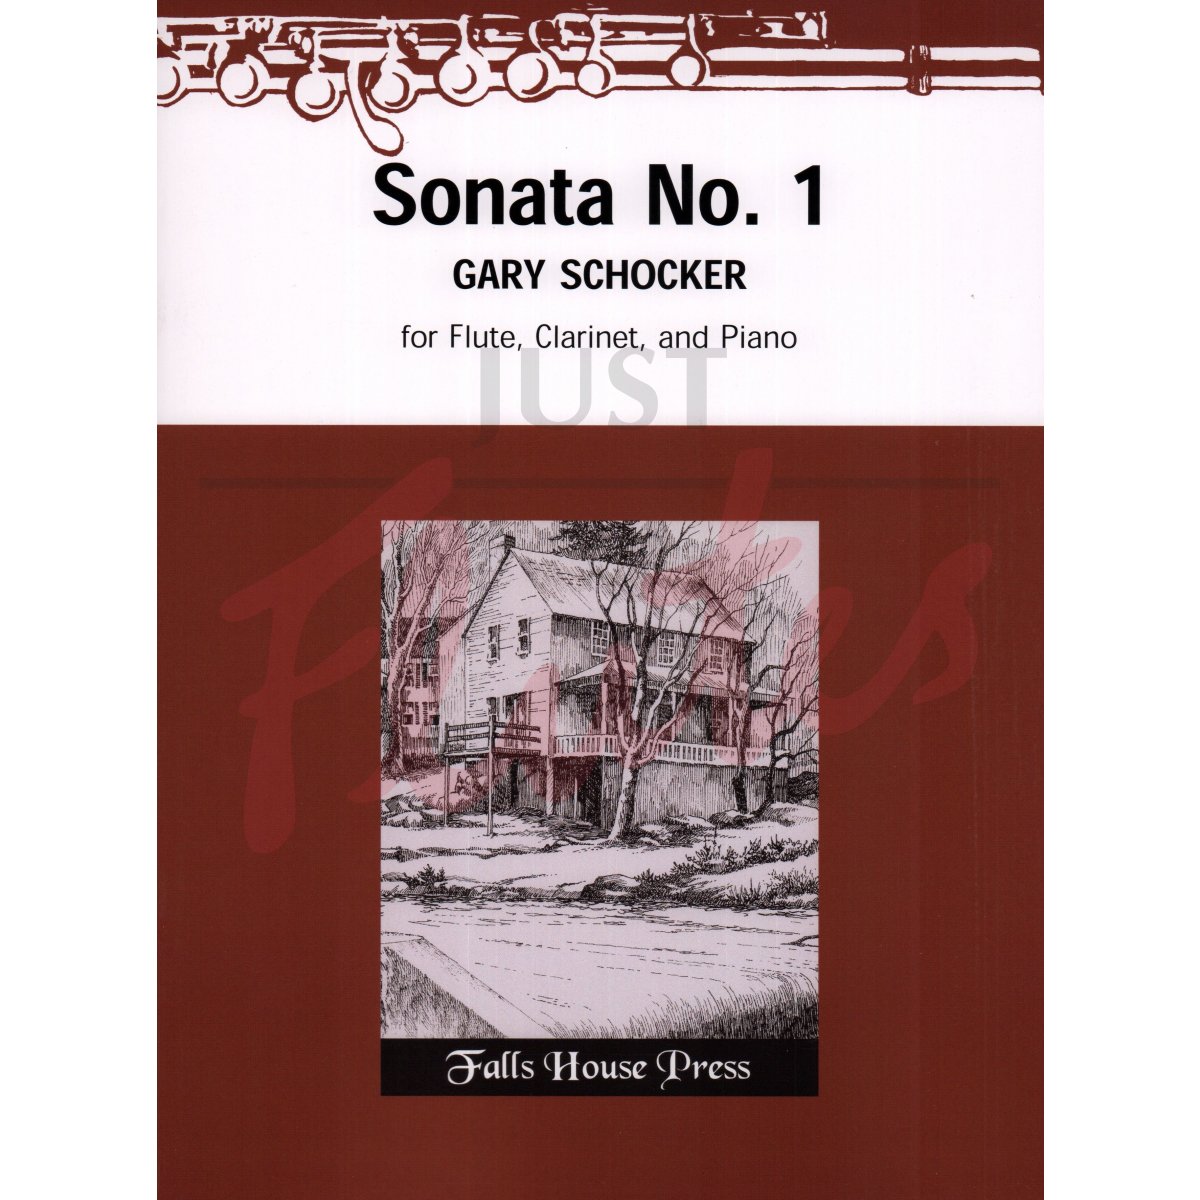 Sonata No. 1 for Flute, Clarinet and Piano